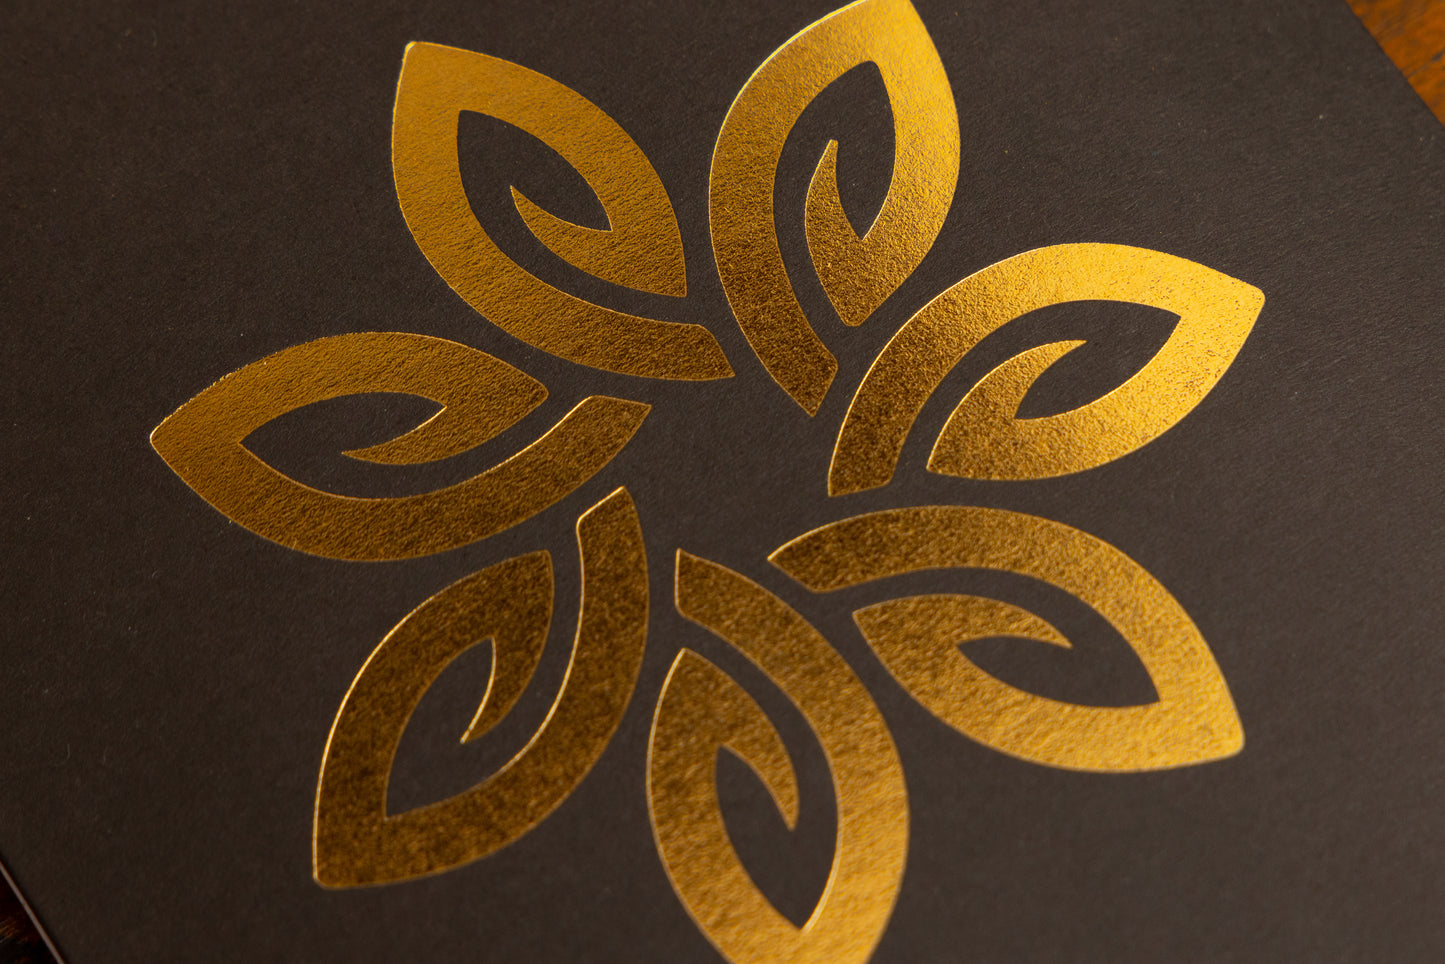 Infinity CBD golden emblem award winning CBD Chocolate made in Wales